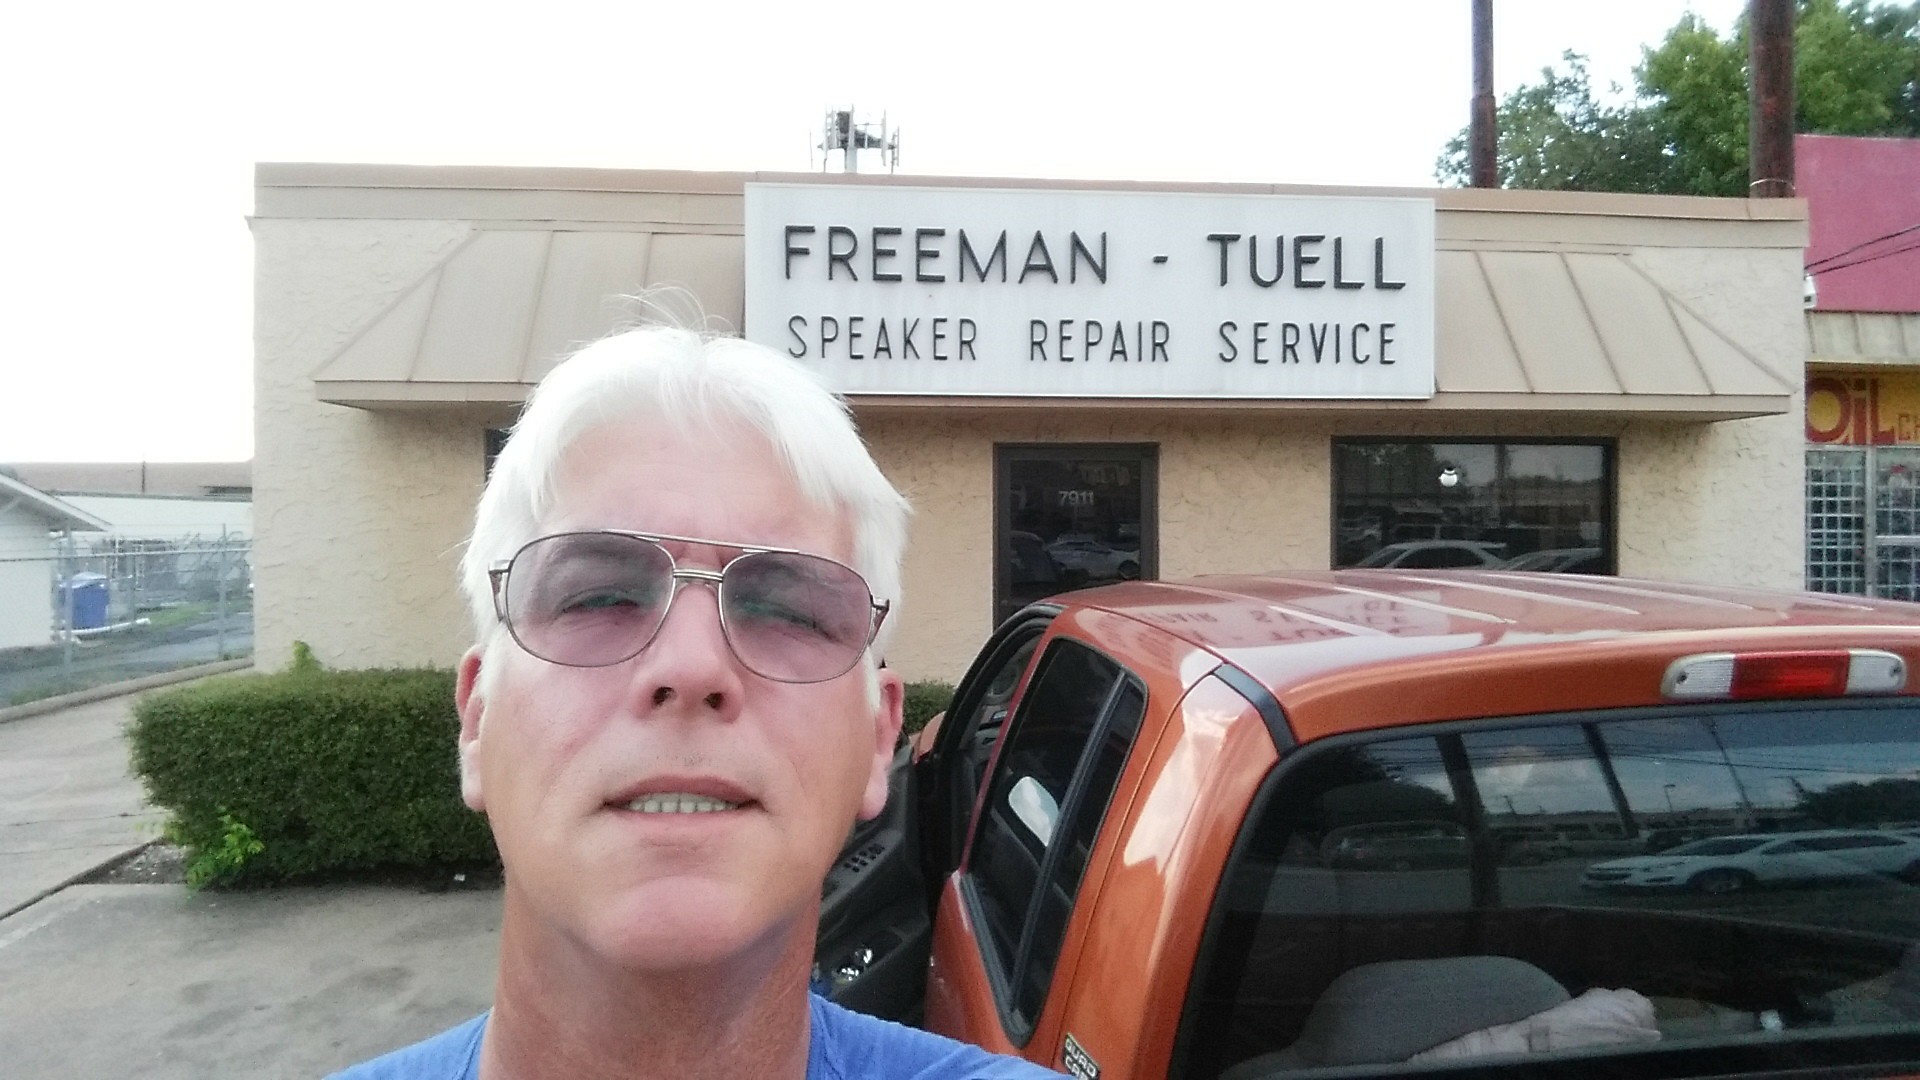 Freeman Tuell speaker repair service Aiwa CS-880U & Pioneer CK-3 woffers dropped off 10 Aug 2017.jpg